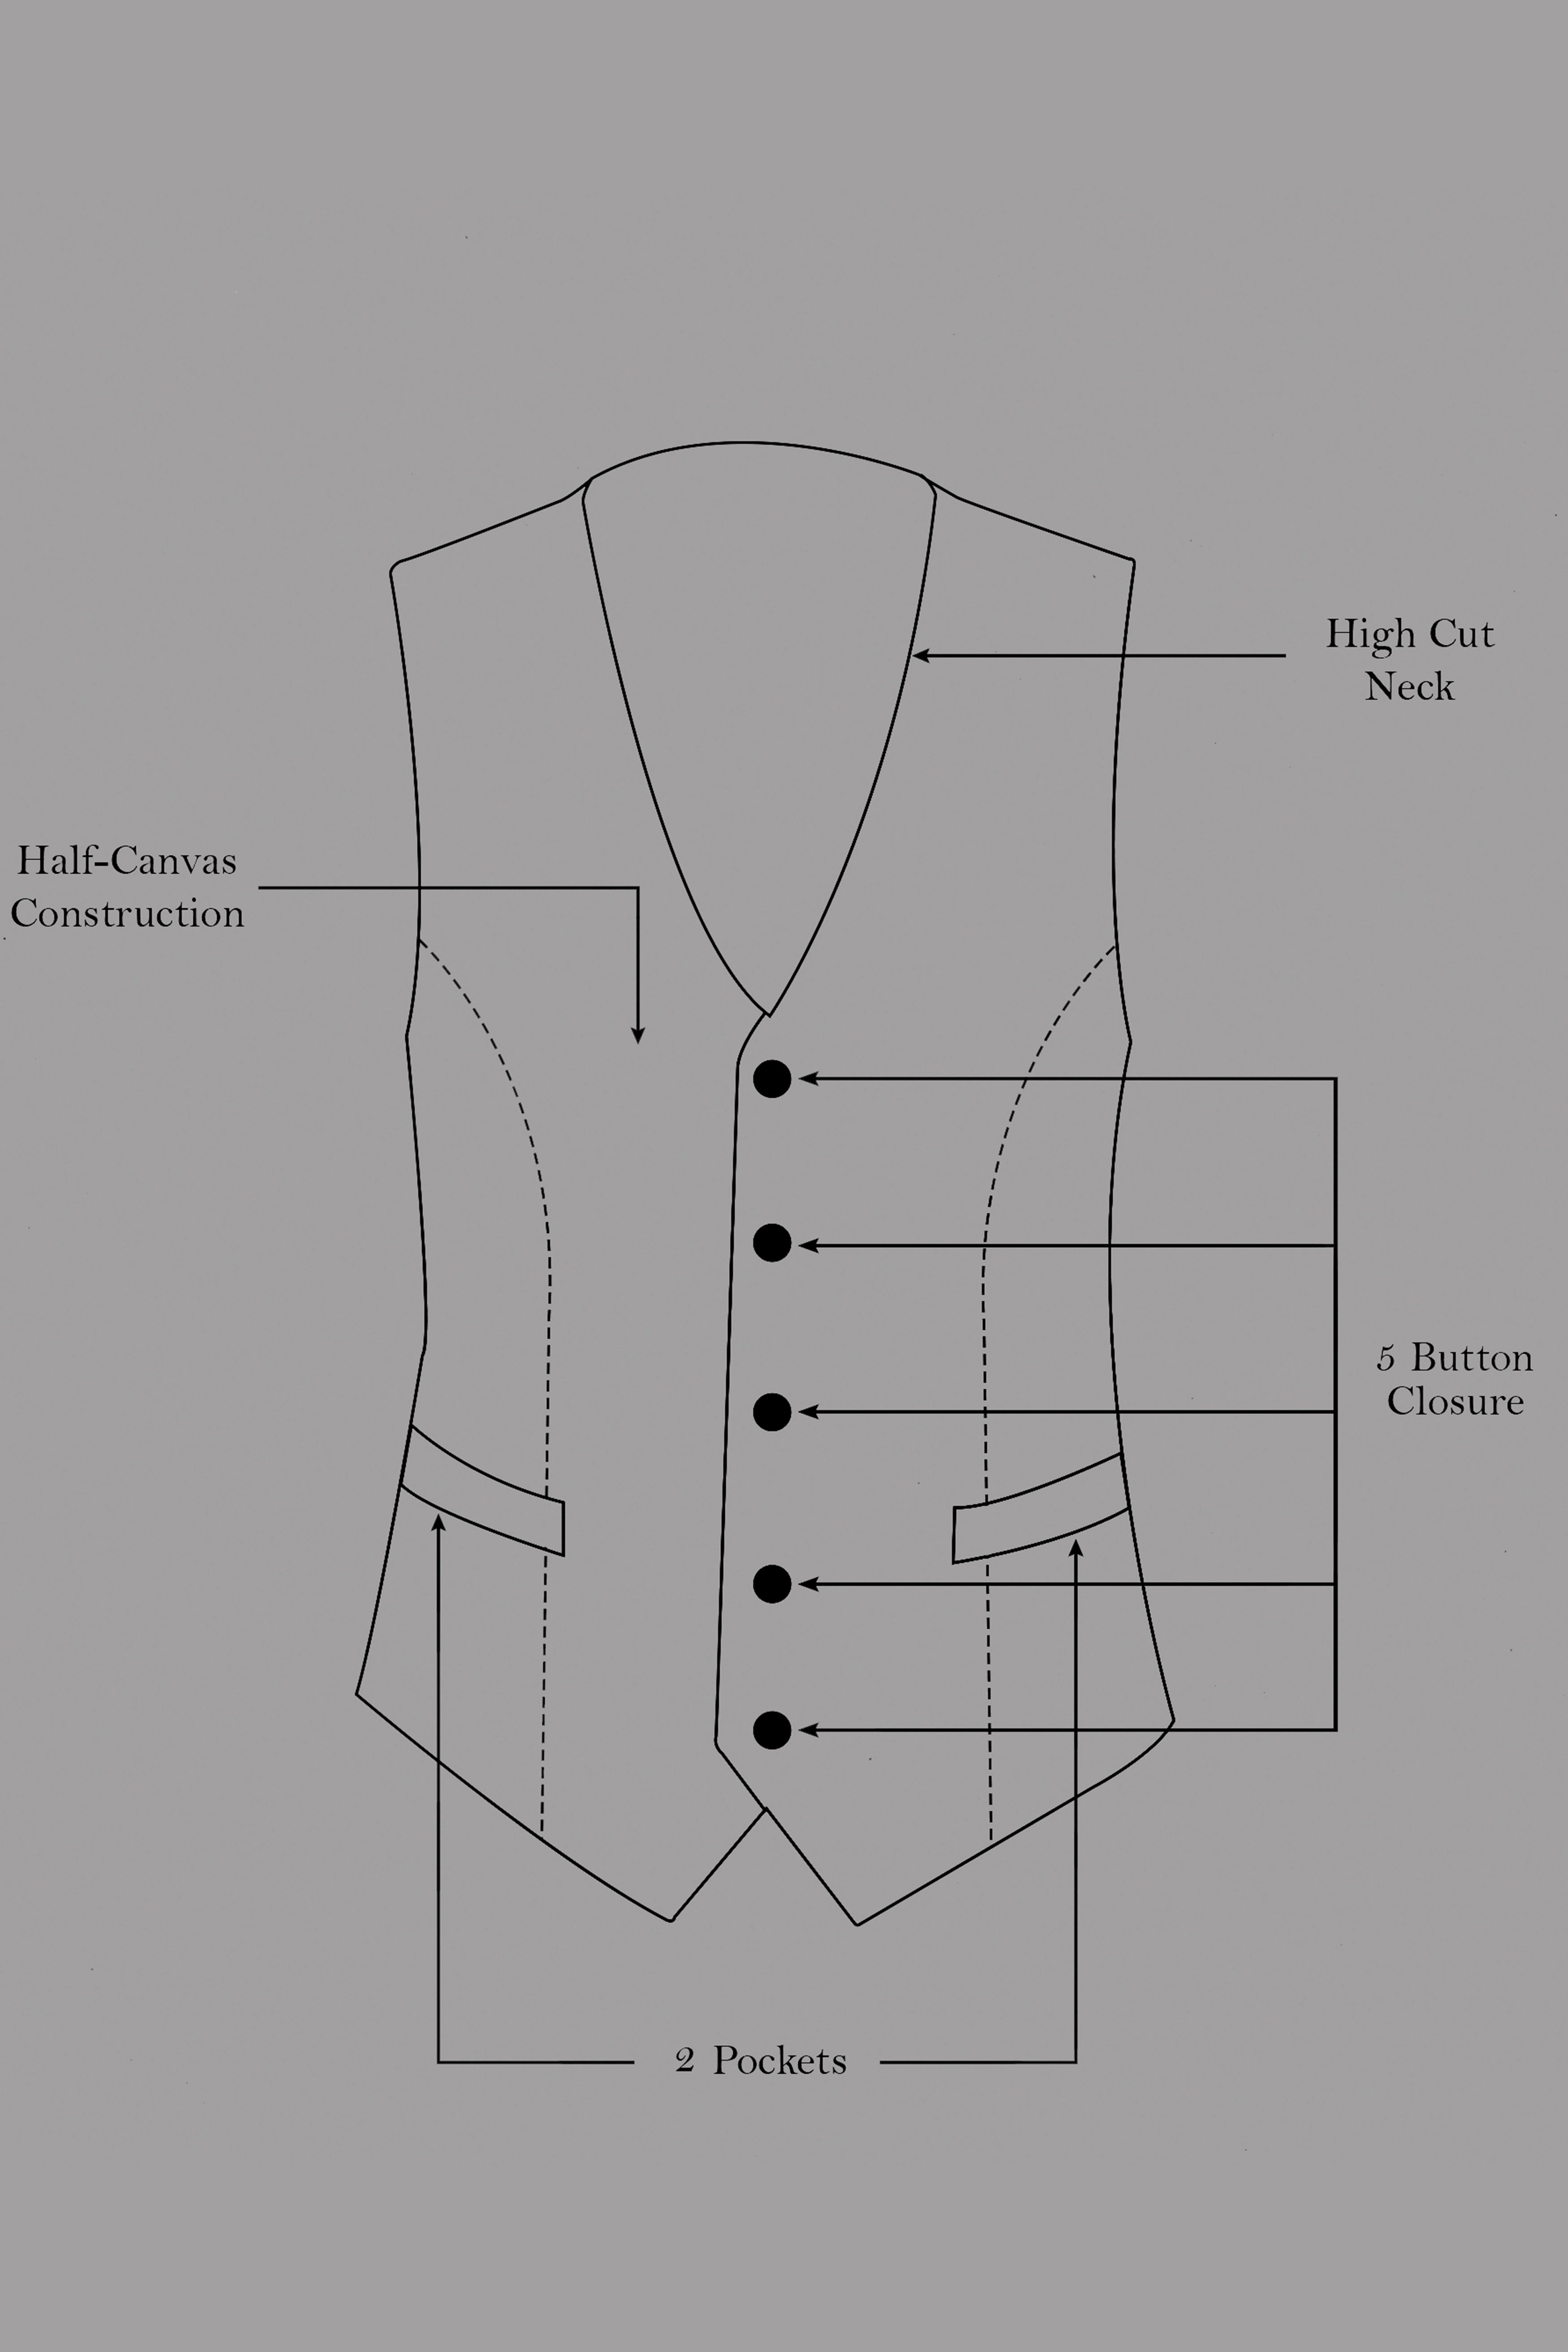 Marine Blue and Black Geometric Pattern Wool Rich Waistcoat